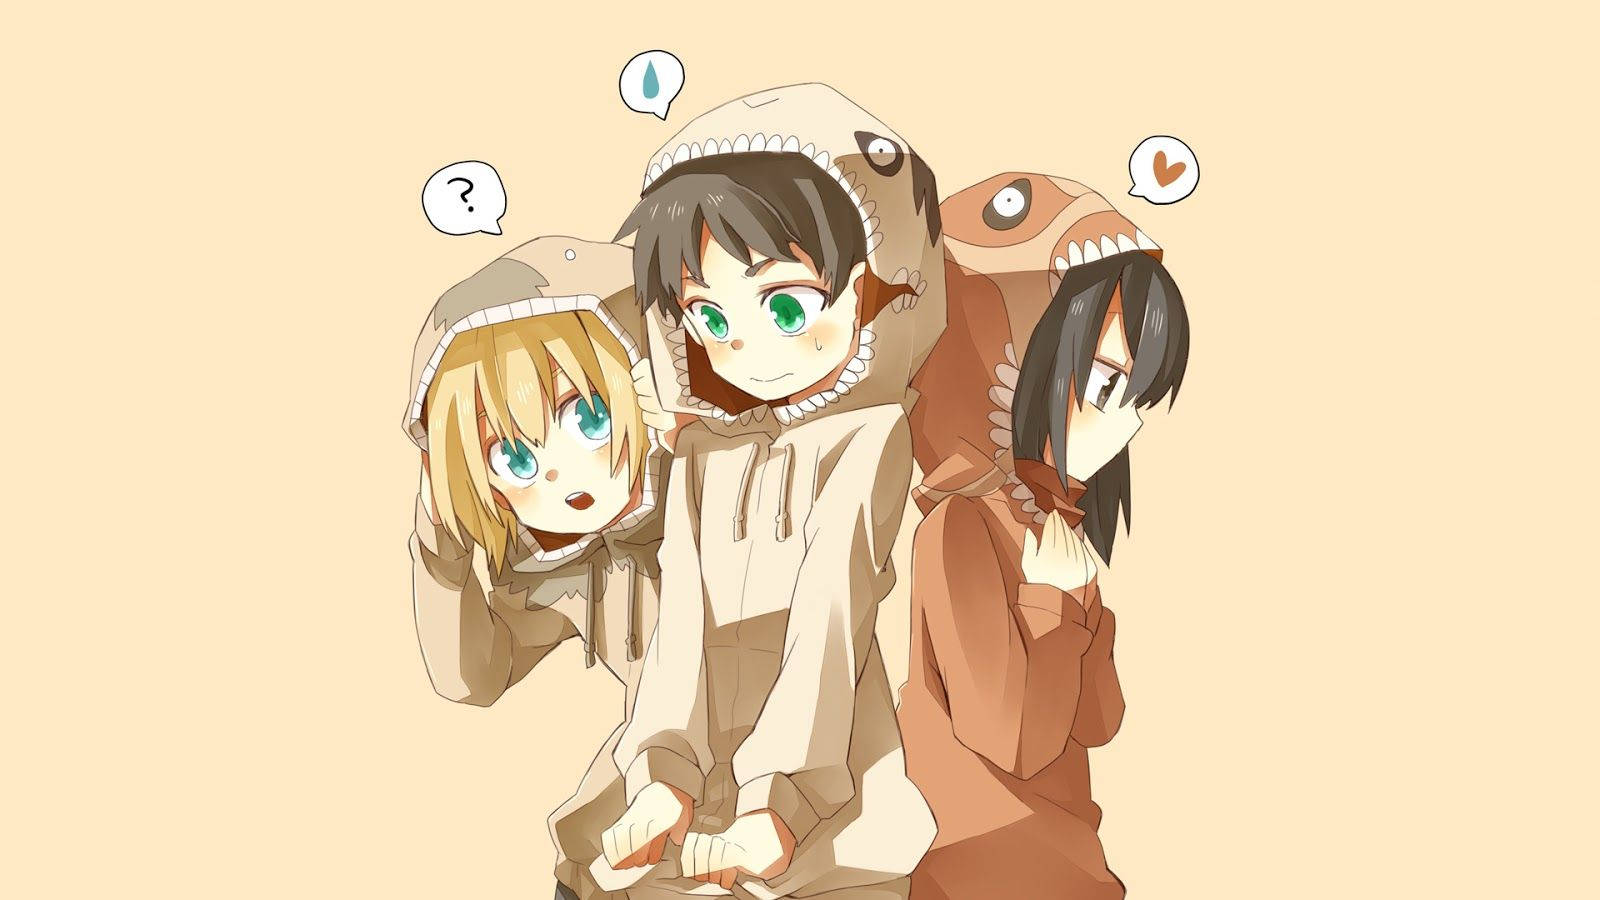 Eren, Armin, and Mikasa stand ready to take on the titans. Wallpaper